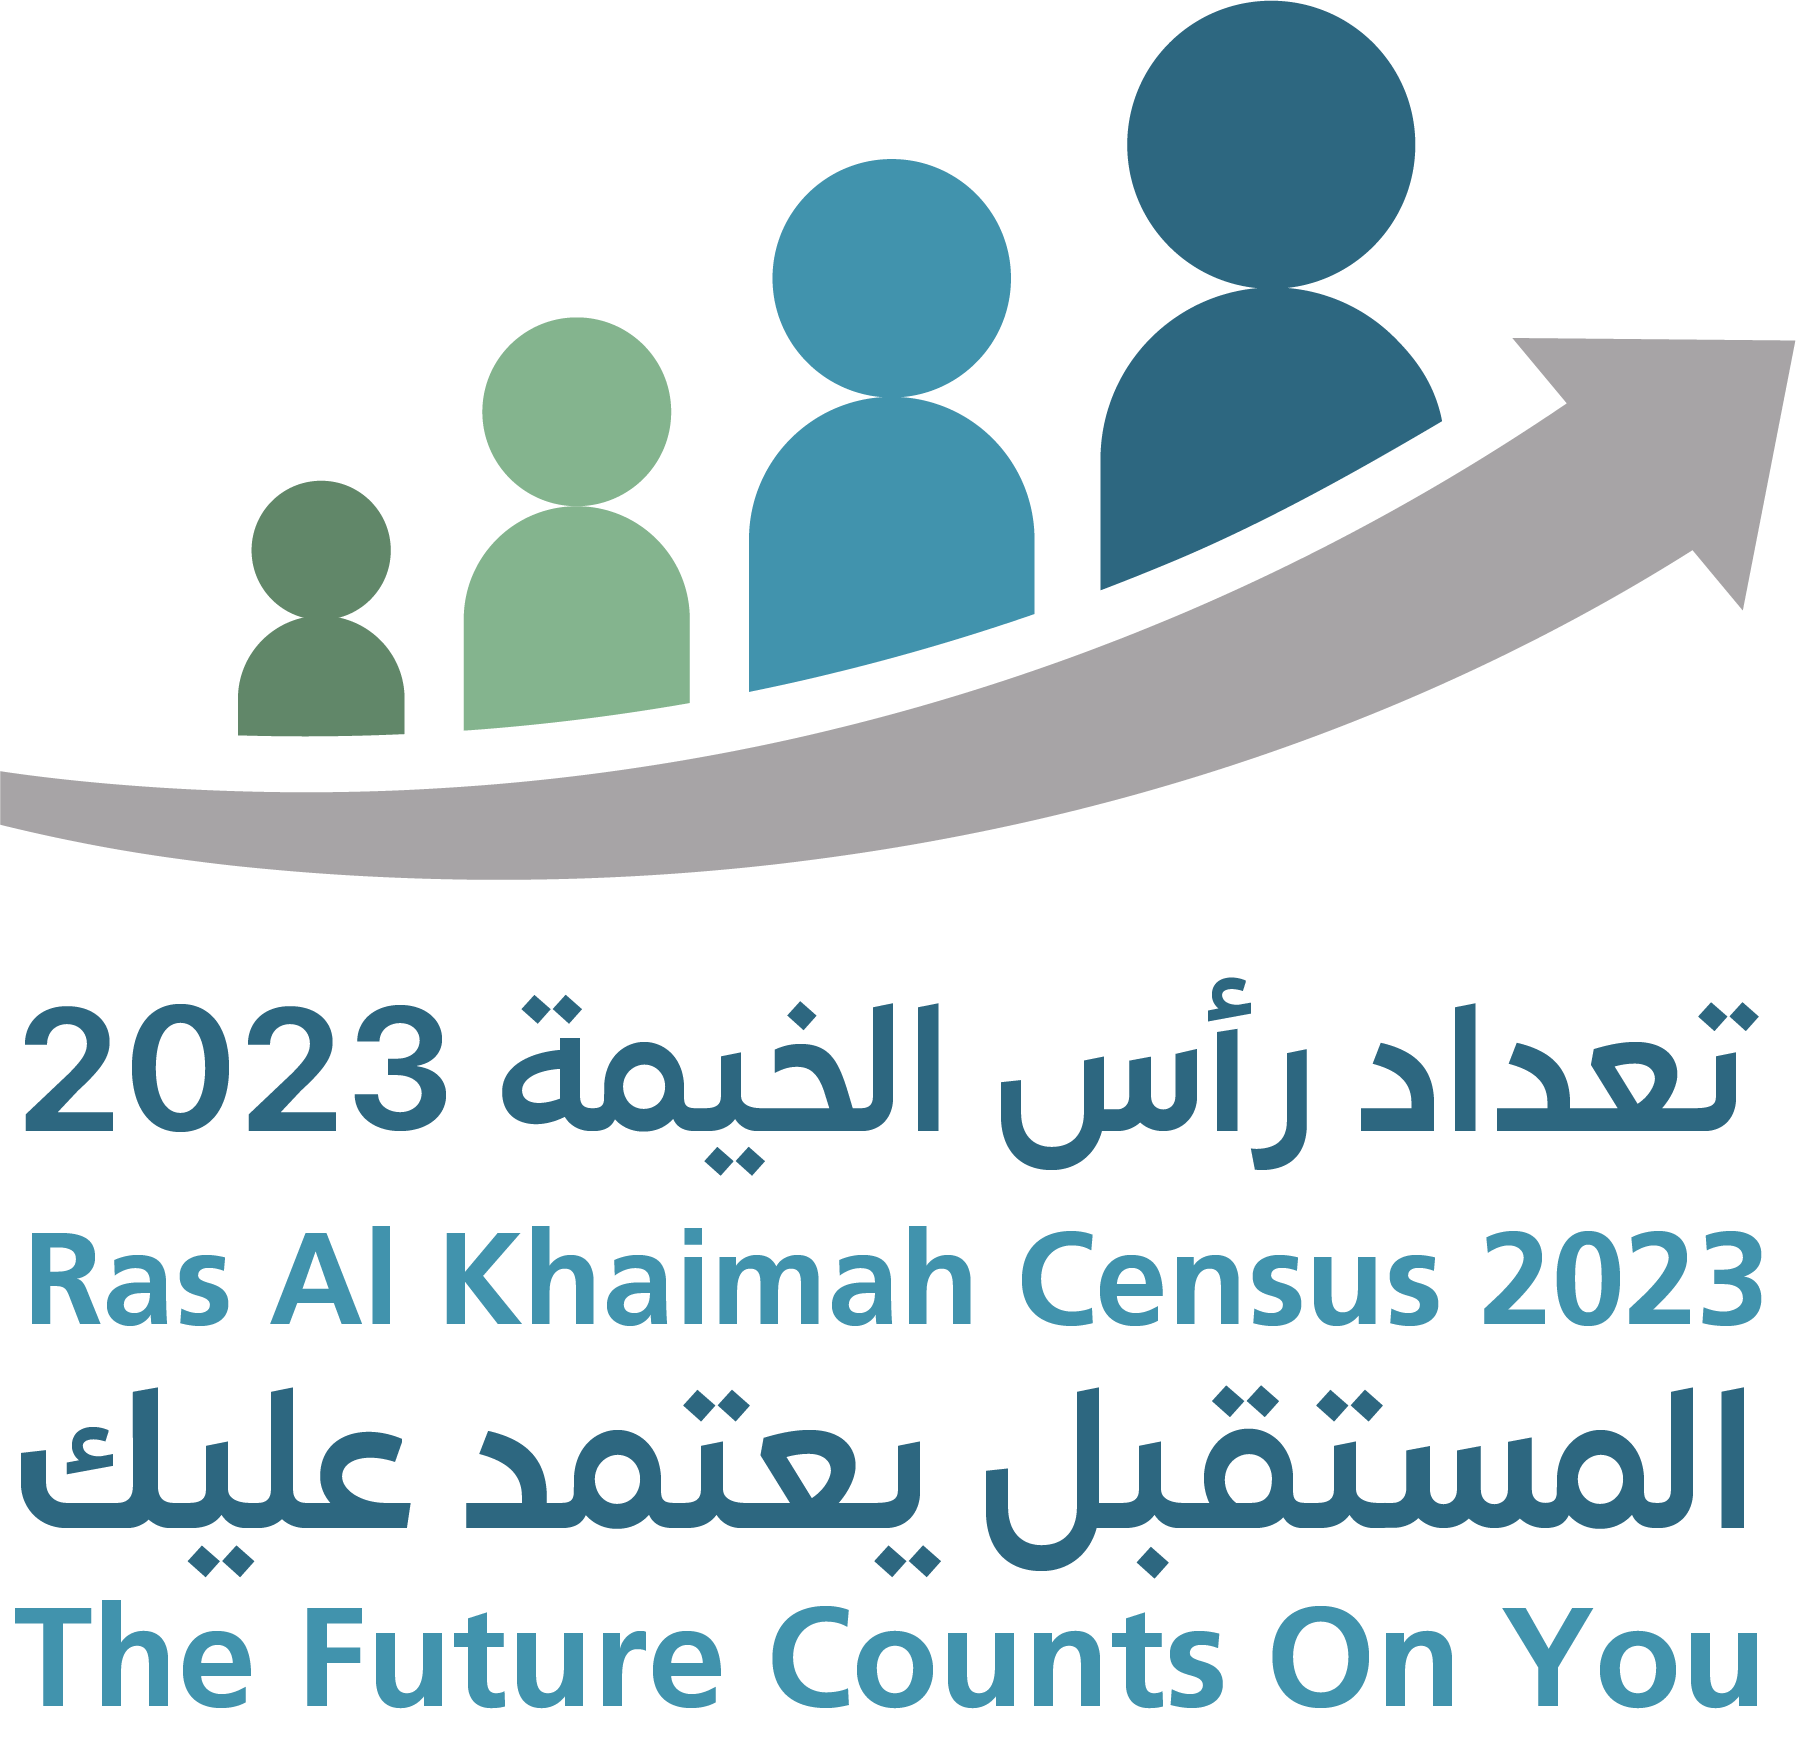 Rak Census logo.png